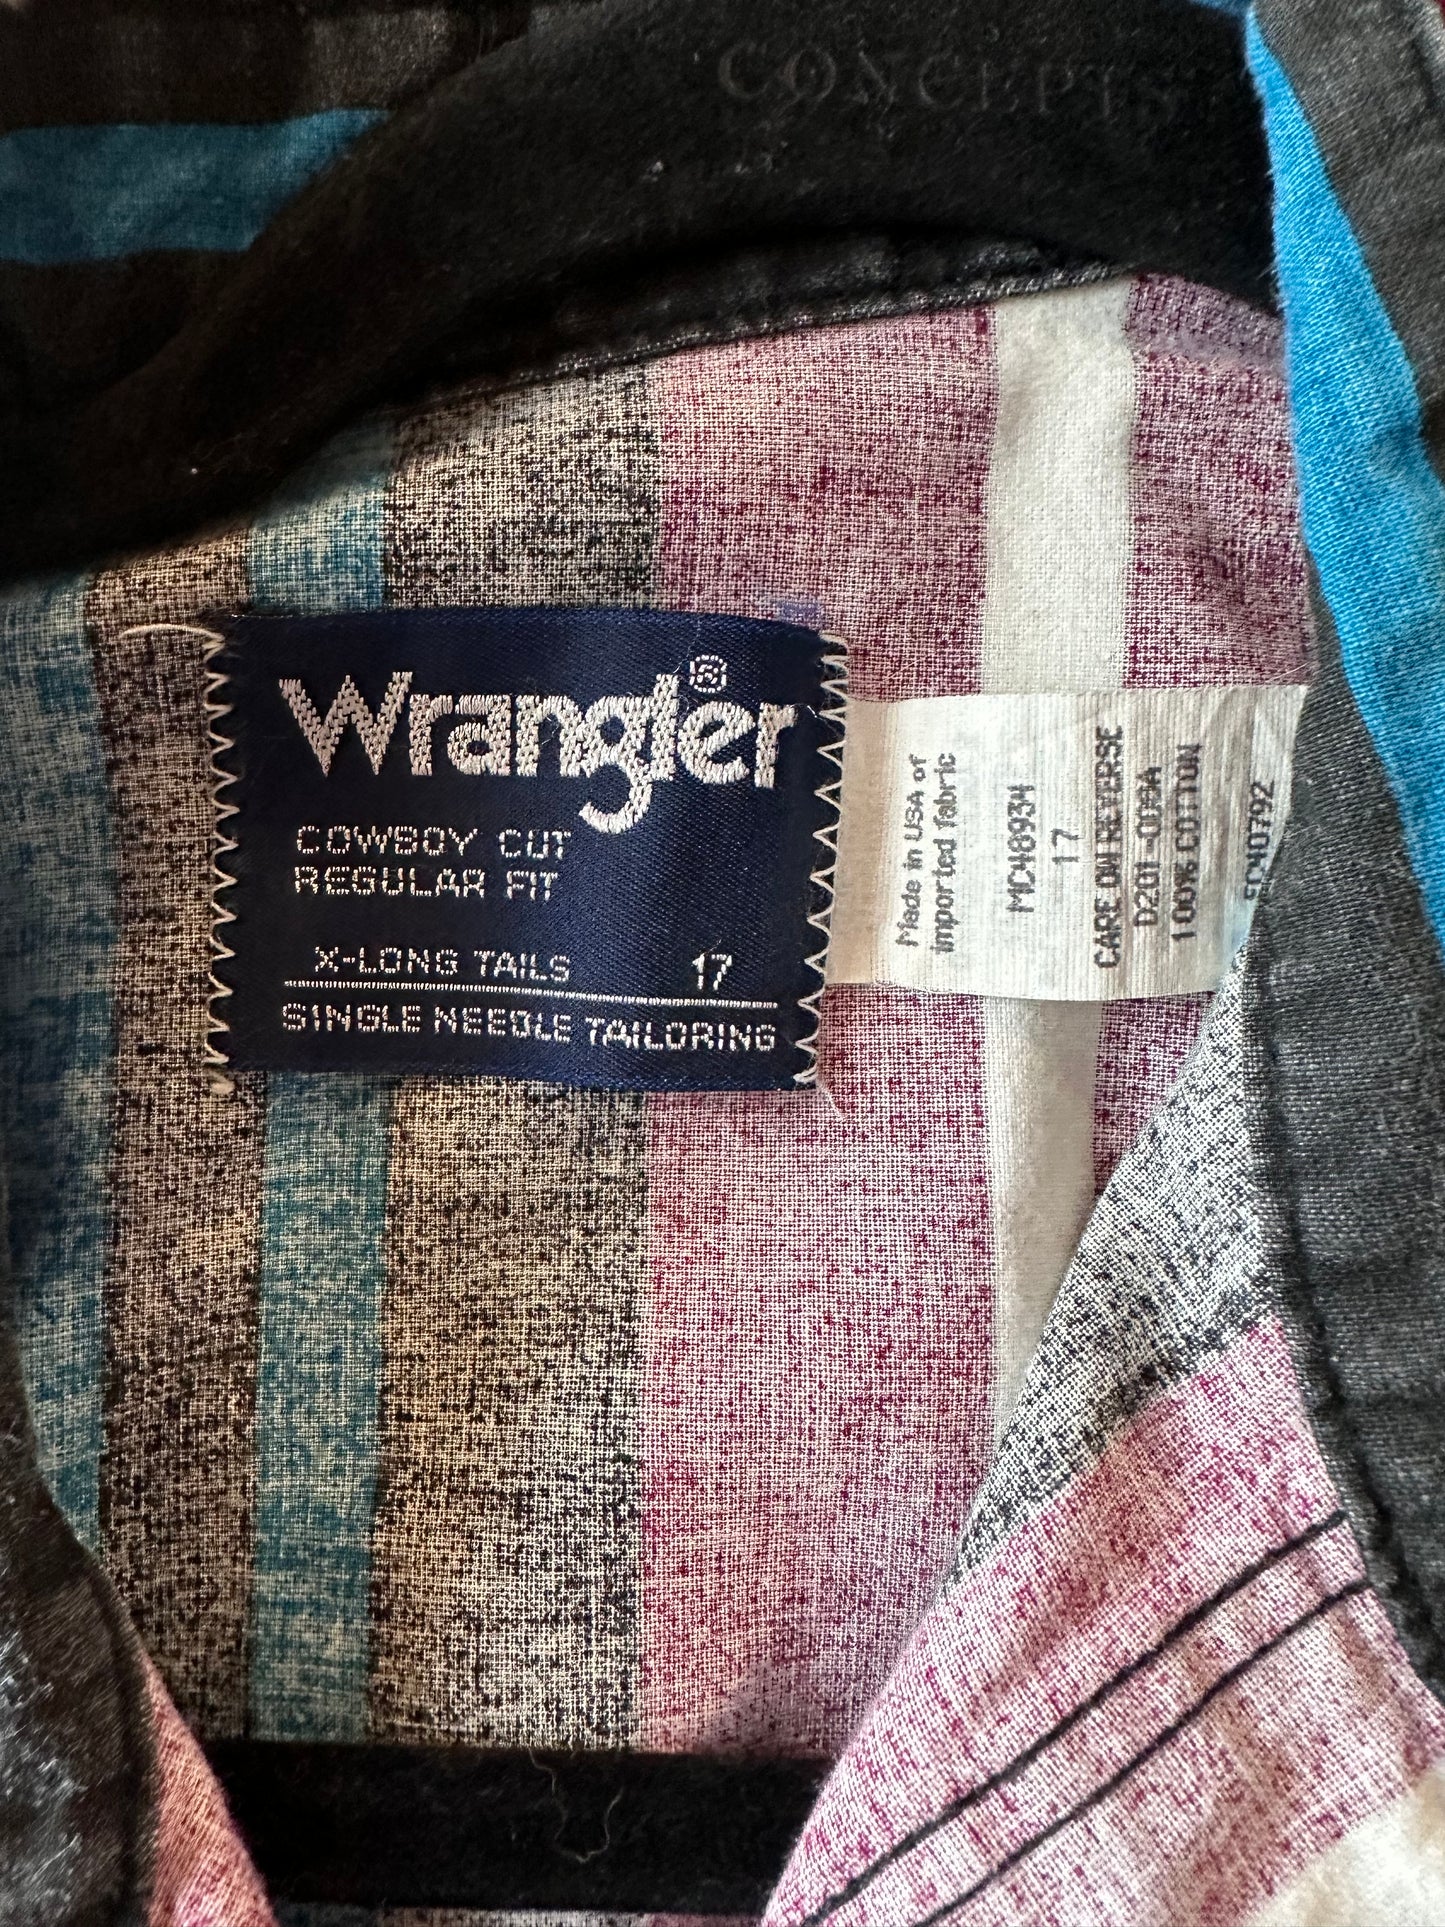 90s 'Wrangler' Striped Short Sleeve Snap Up Western Shirt / Large